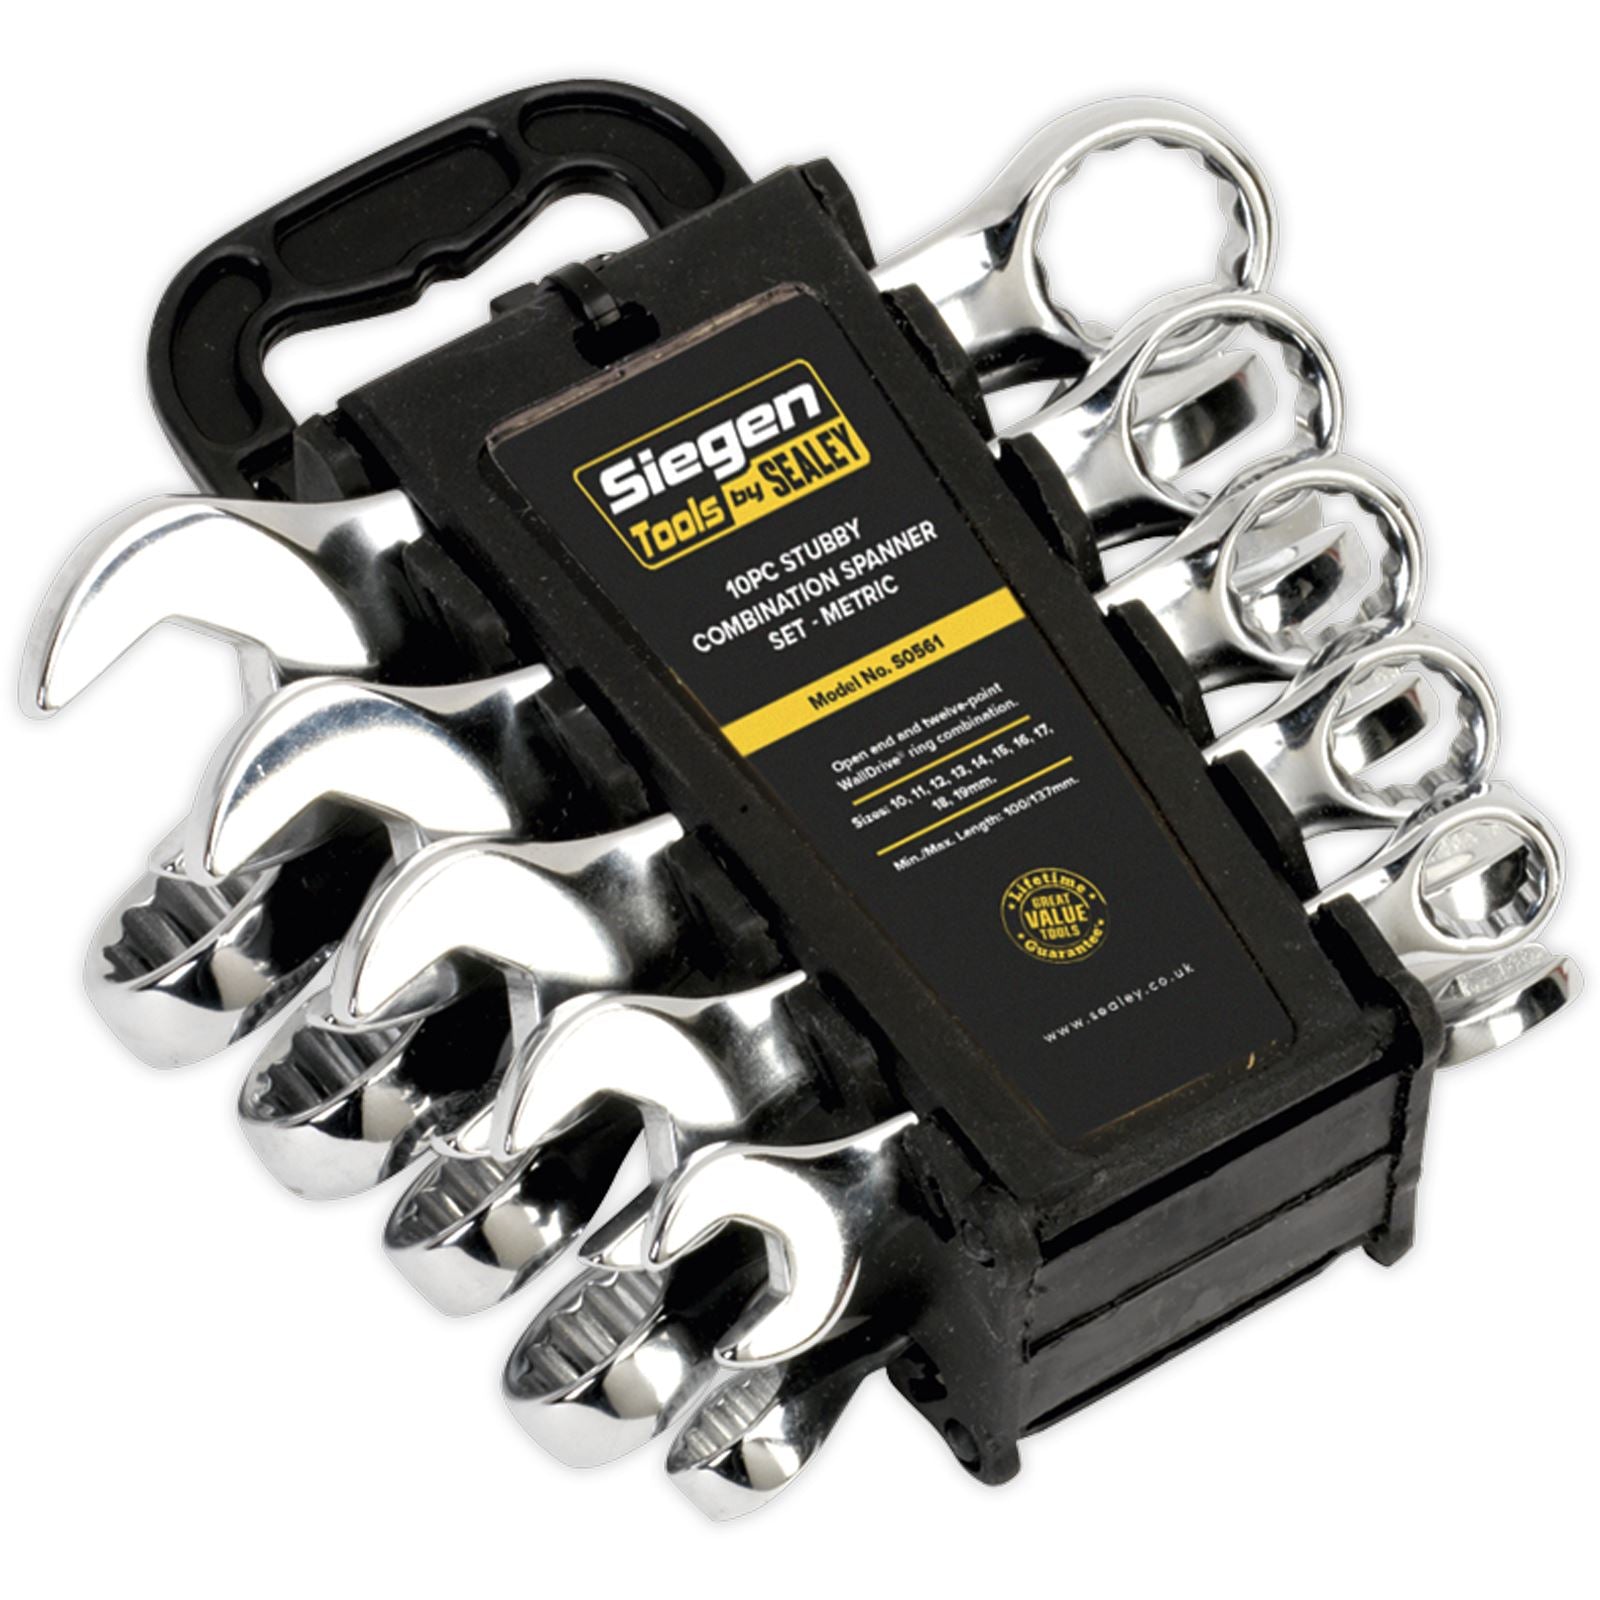 Siegen 10 Piece Stubby Combination Spanner Set 10-19mm Open End Ring Carry Case